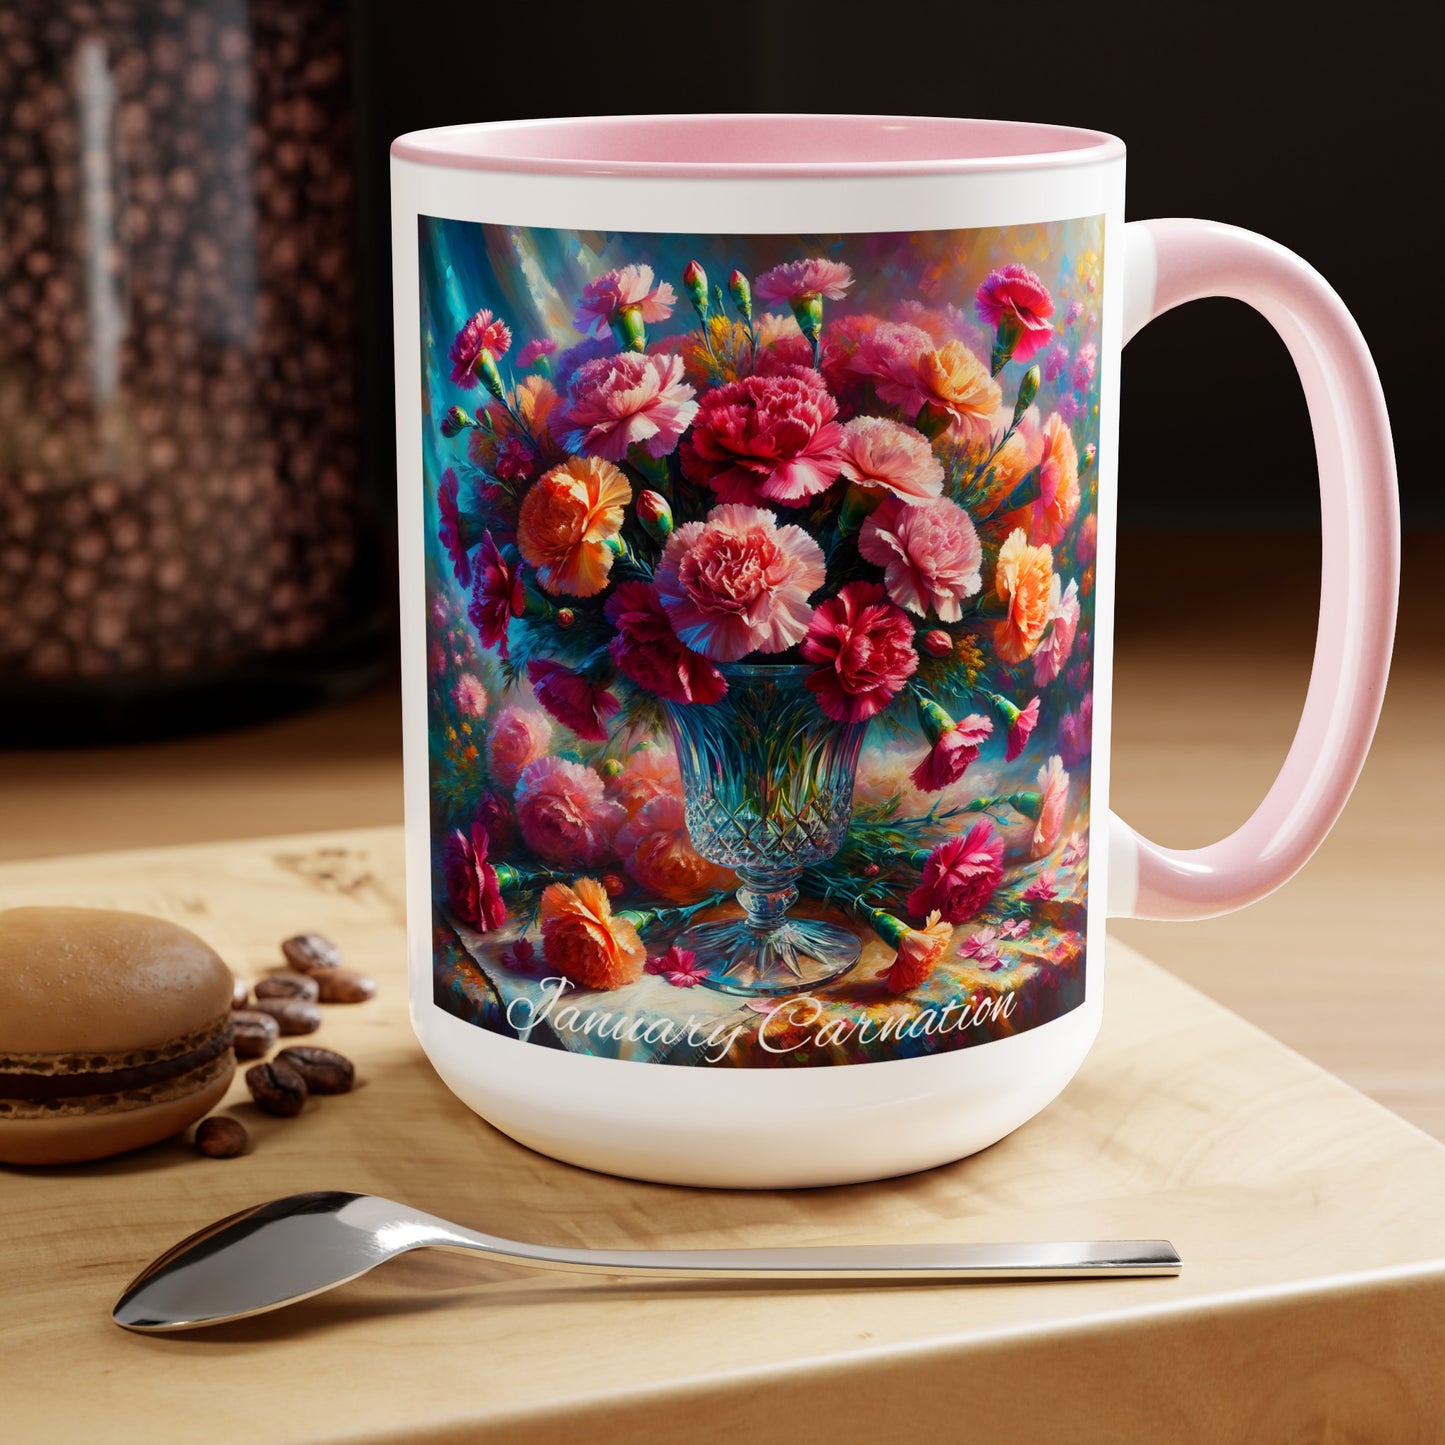 15oz January Carnation Coffee Mug a great gift for anyone born in January